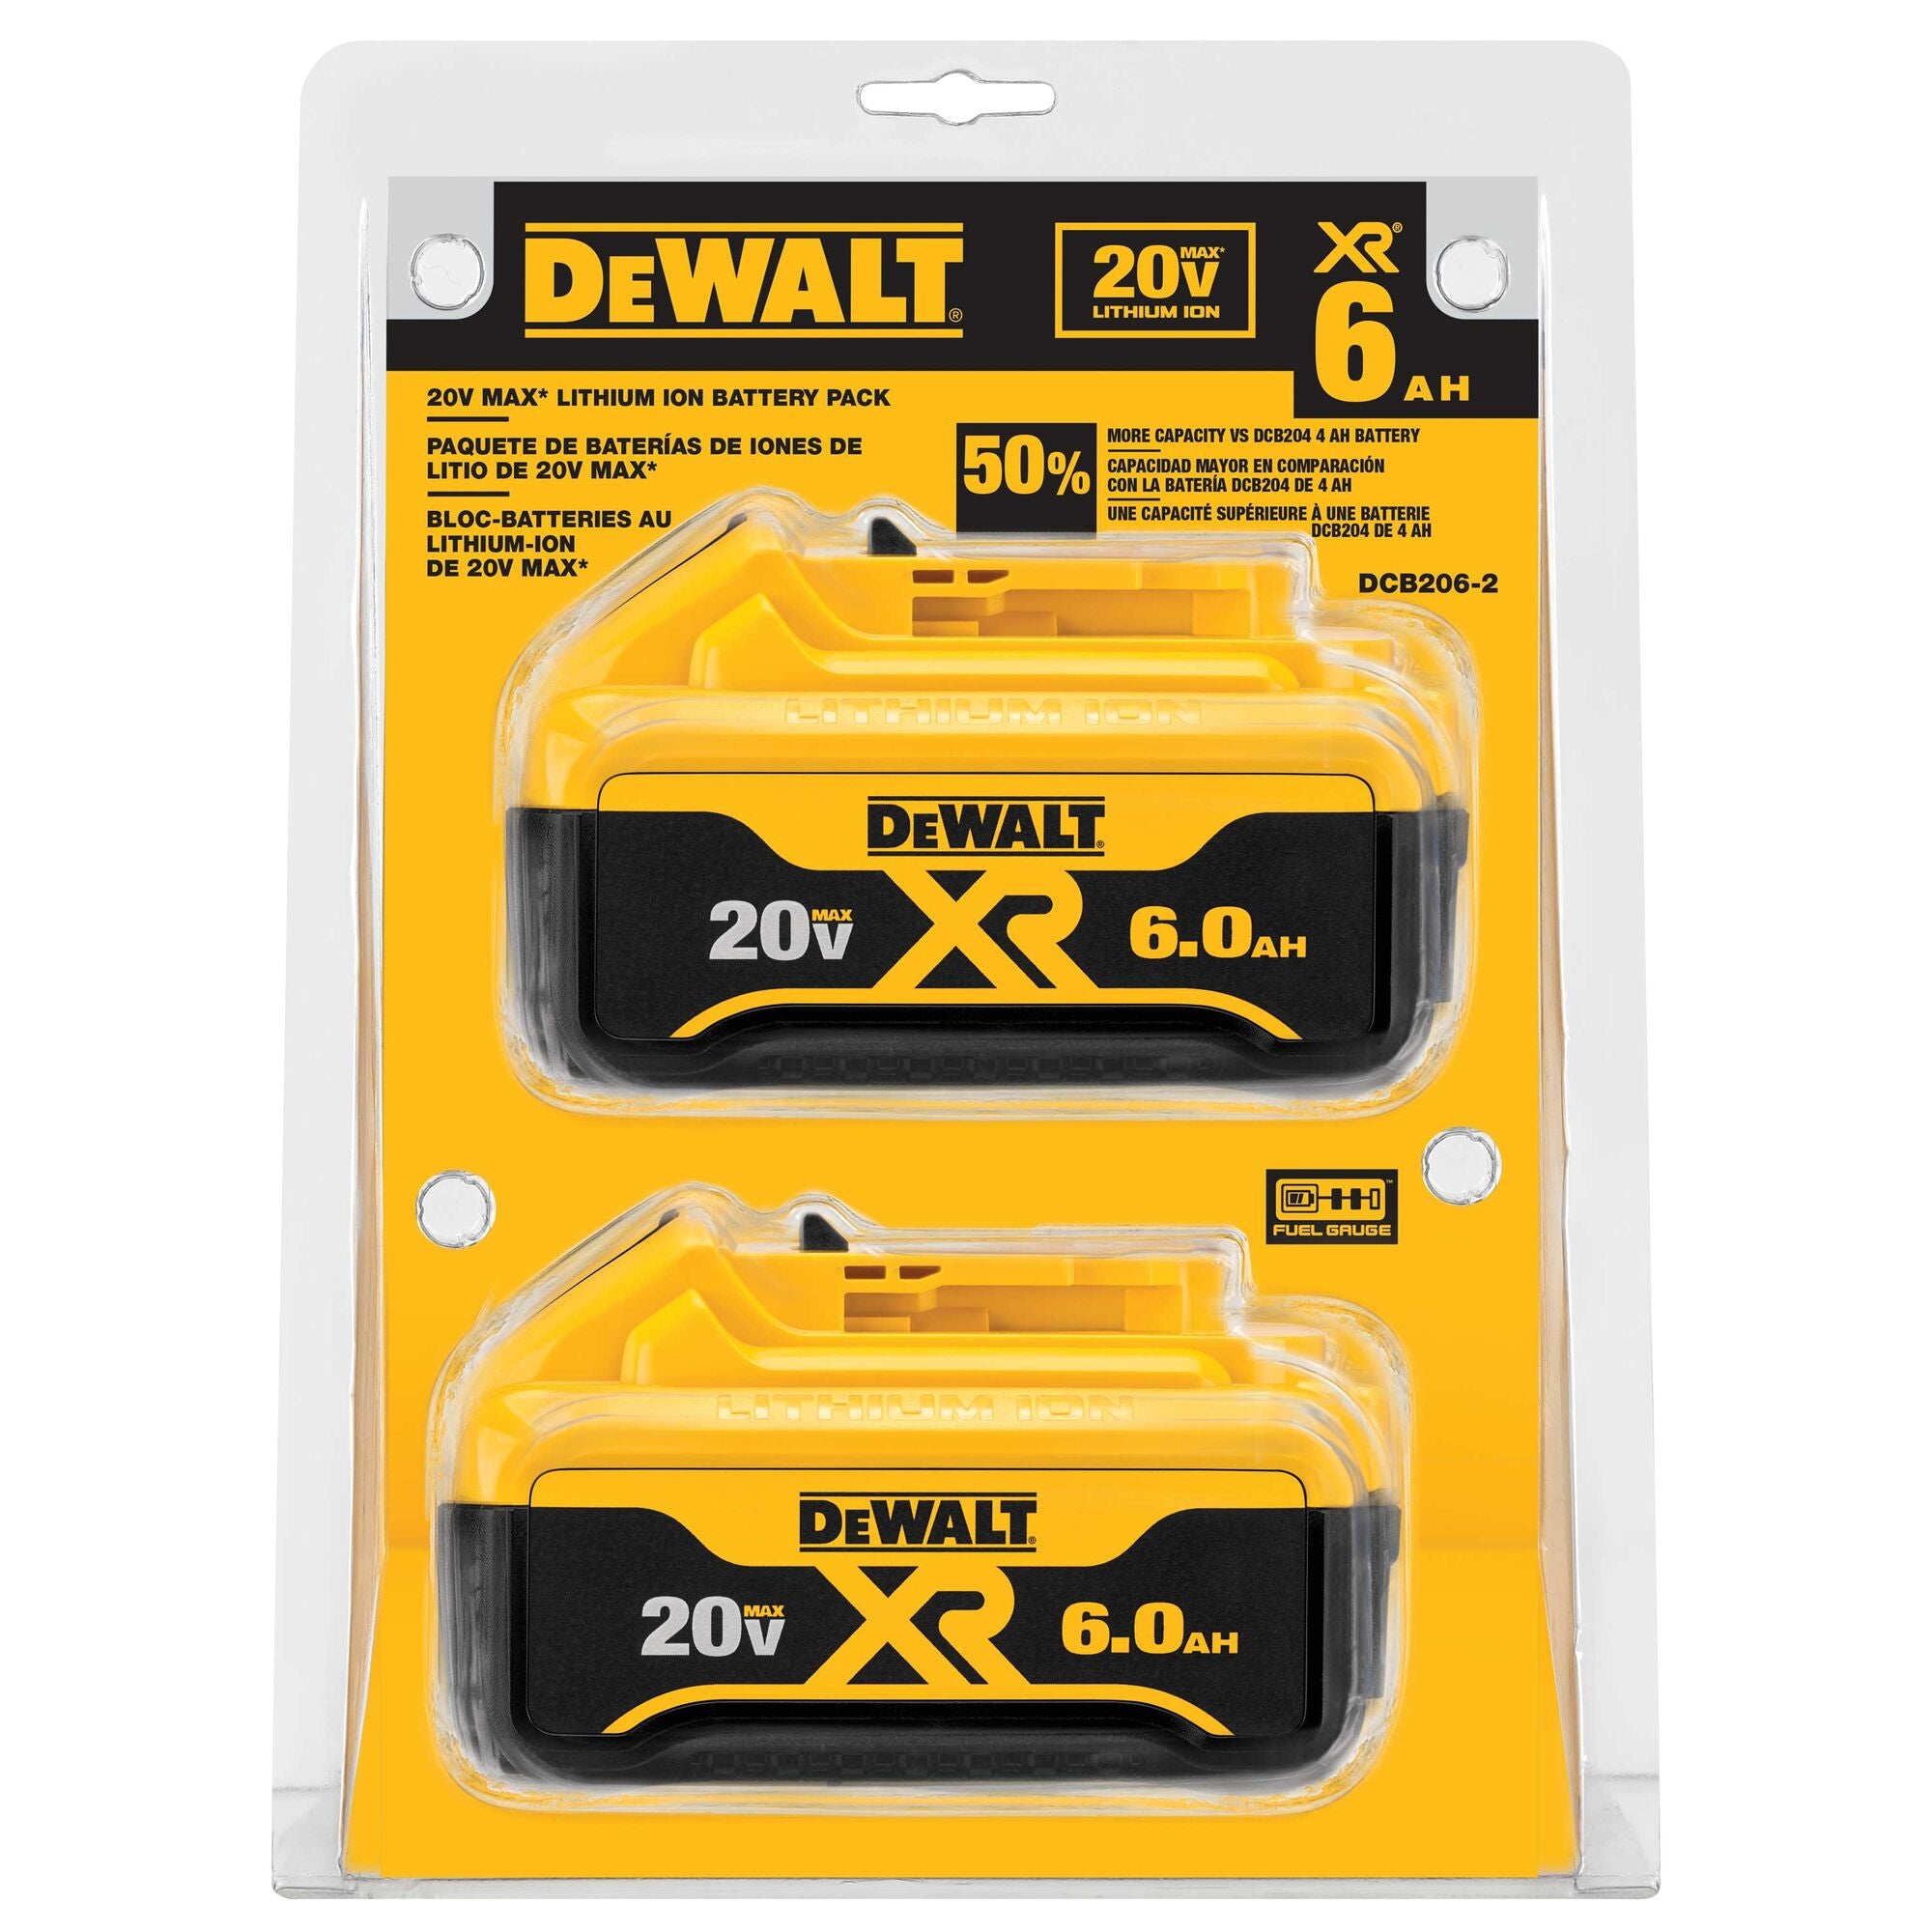 20 Volt XR DeWALT Batteries - 6aH 2 Pack